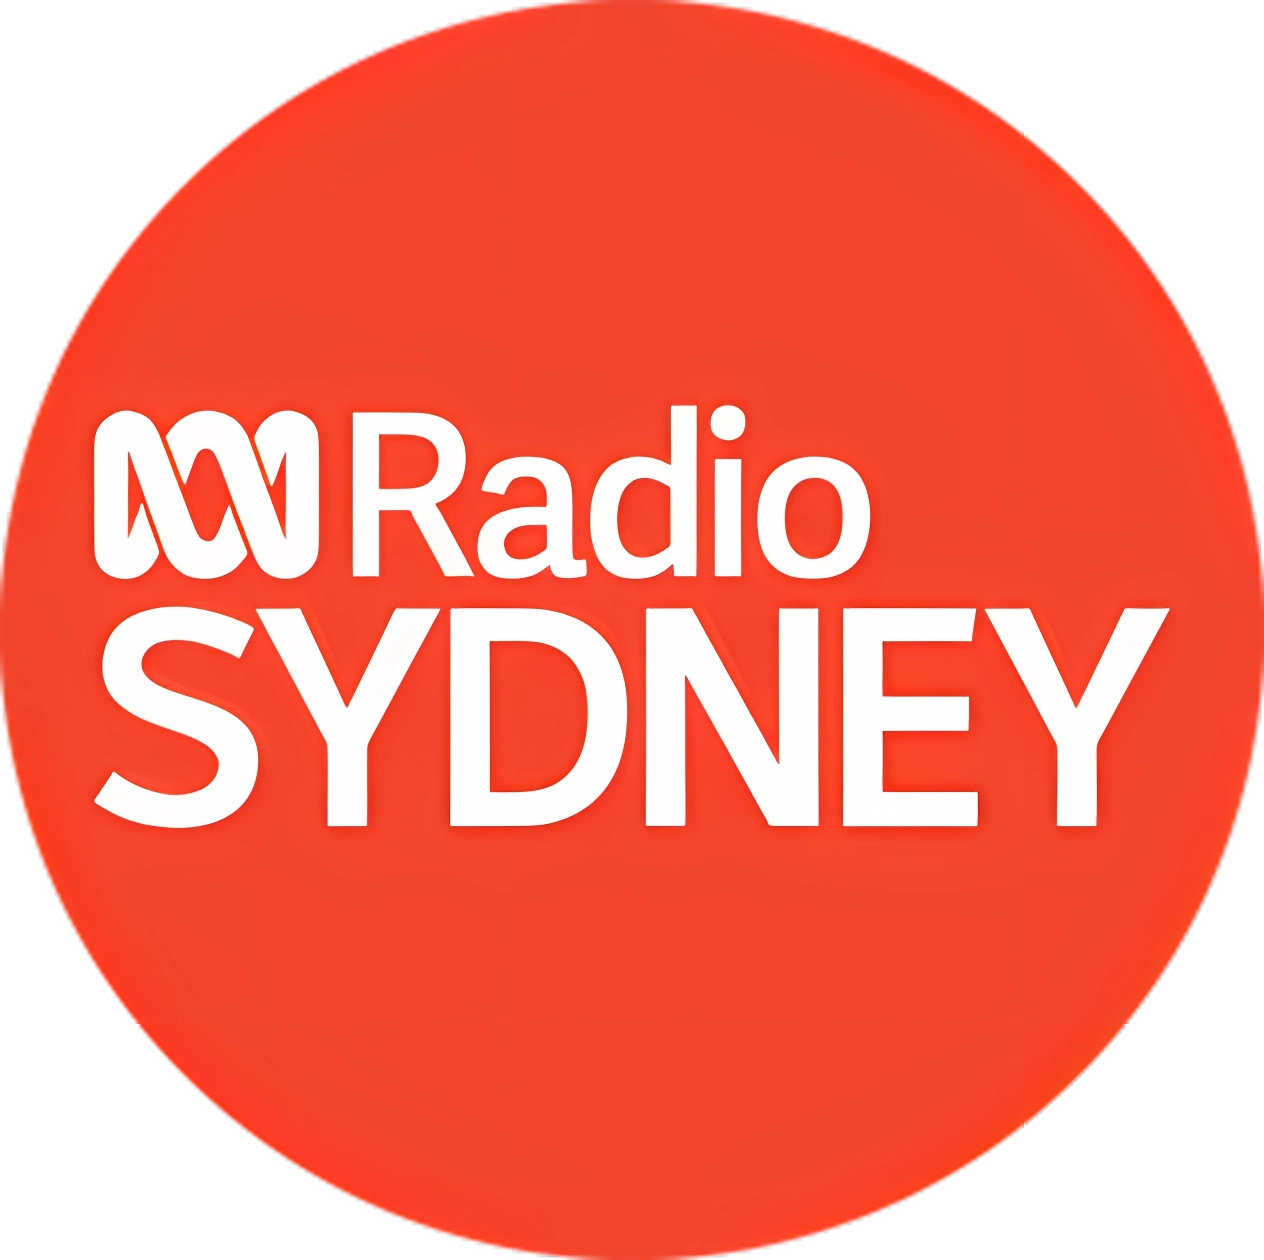 ABC radio sydney.png